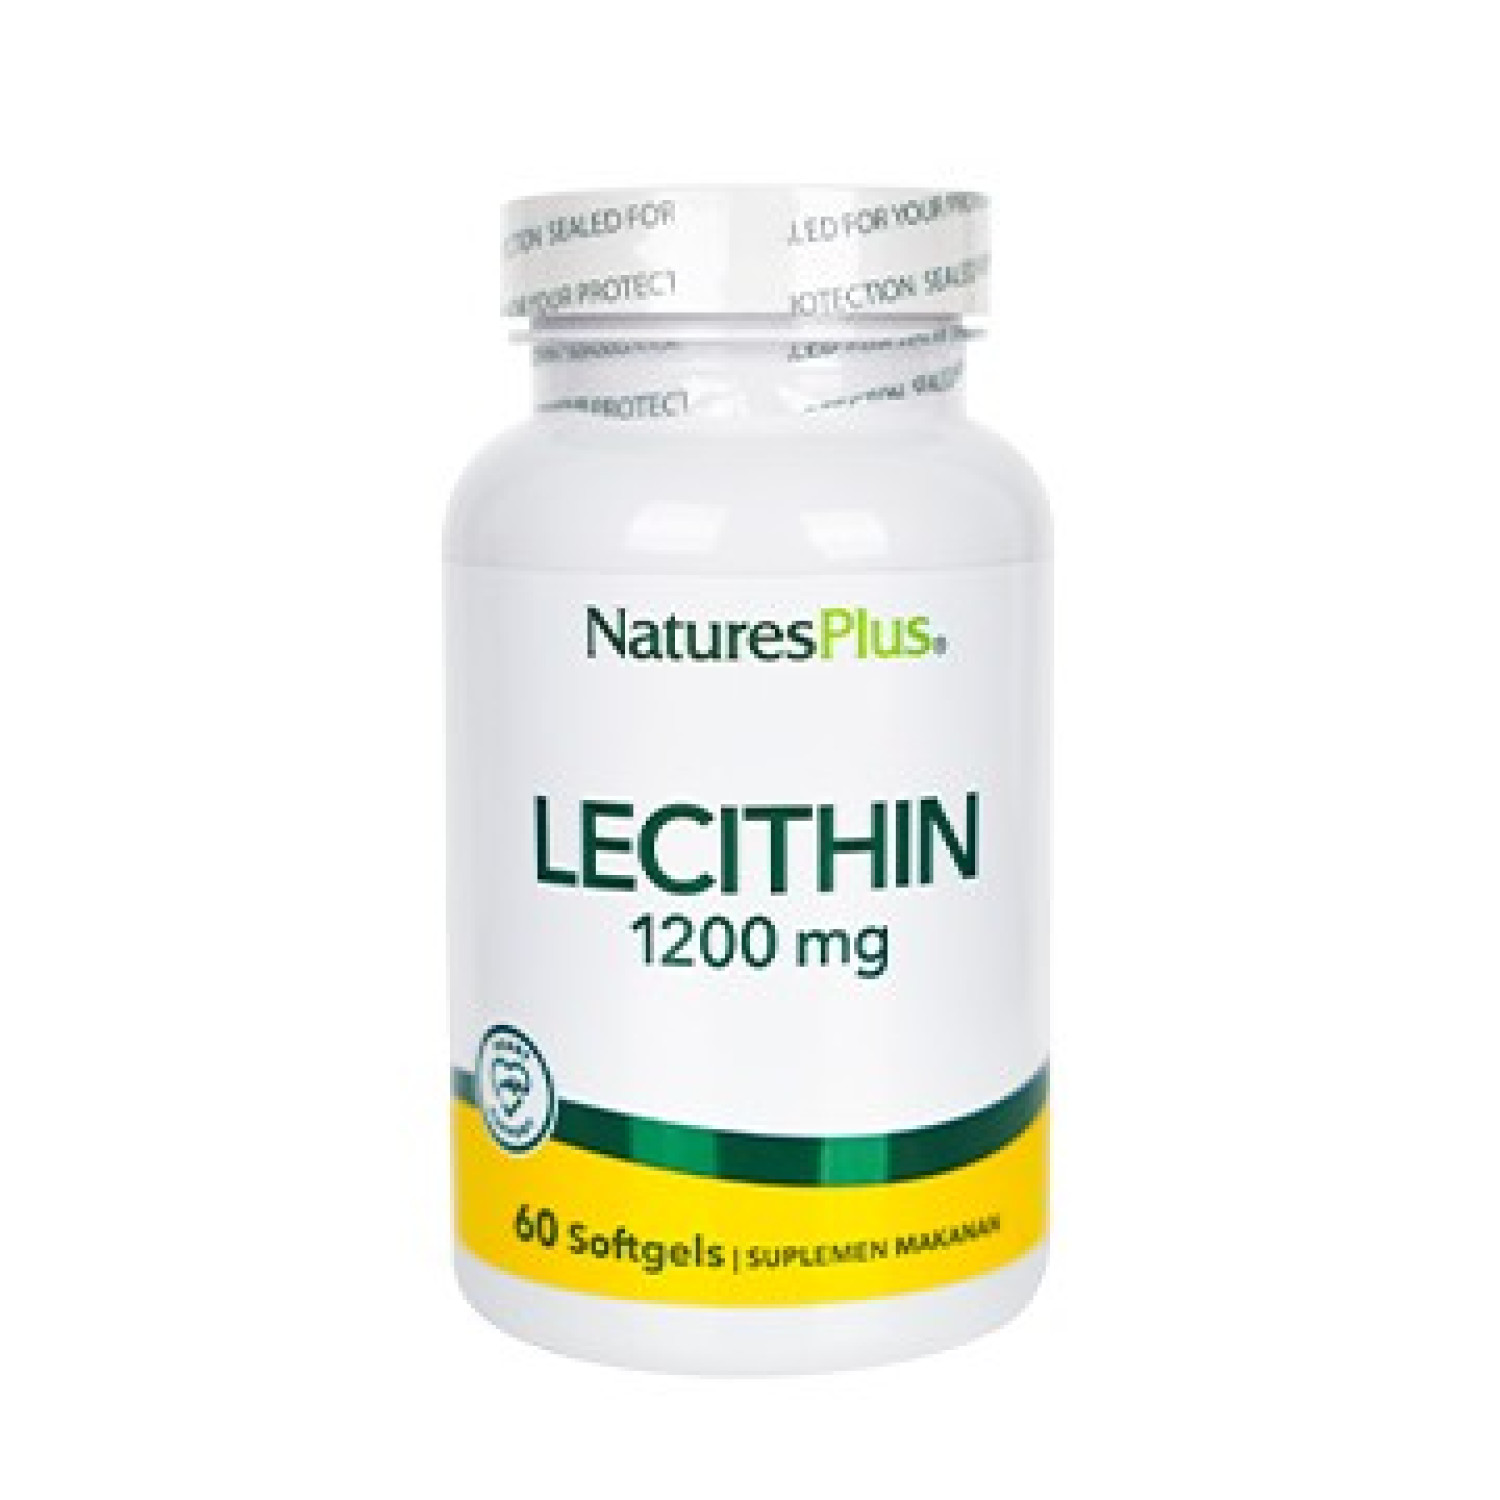 Natures Plus Natures Plus Lecithin 1200 mg